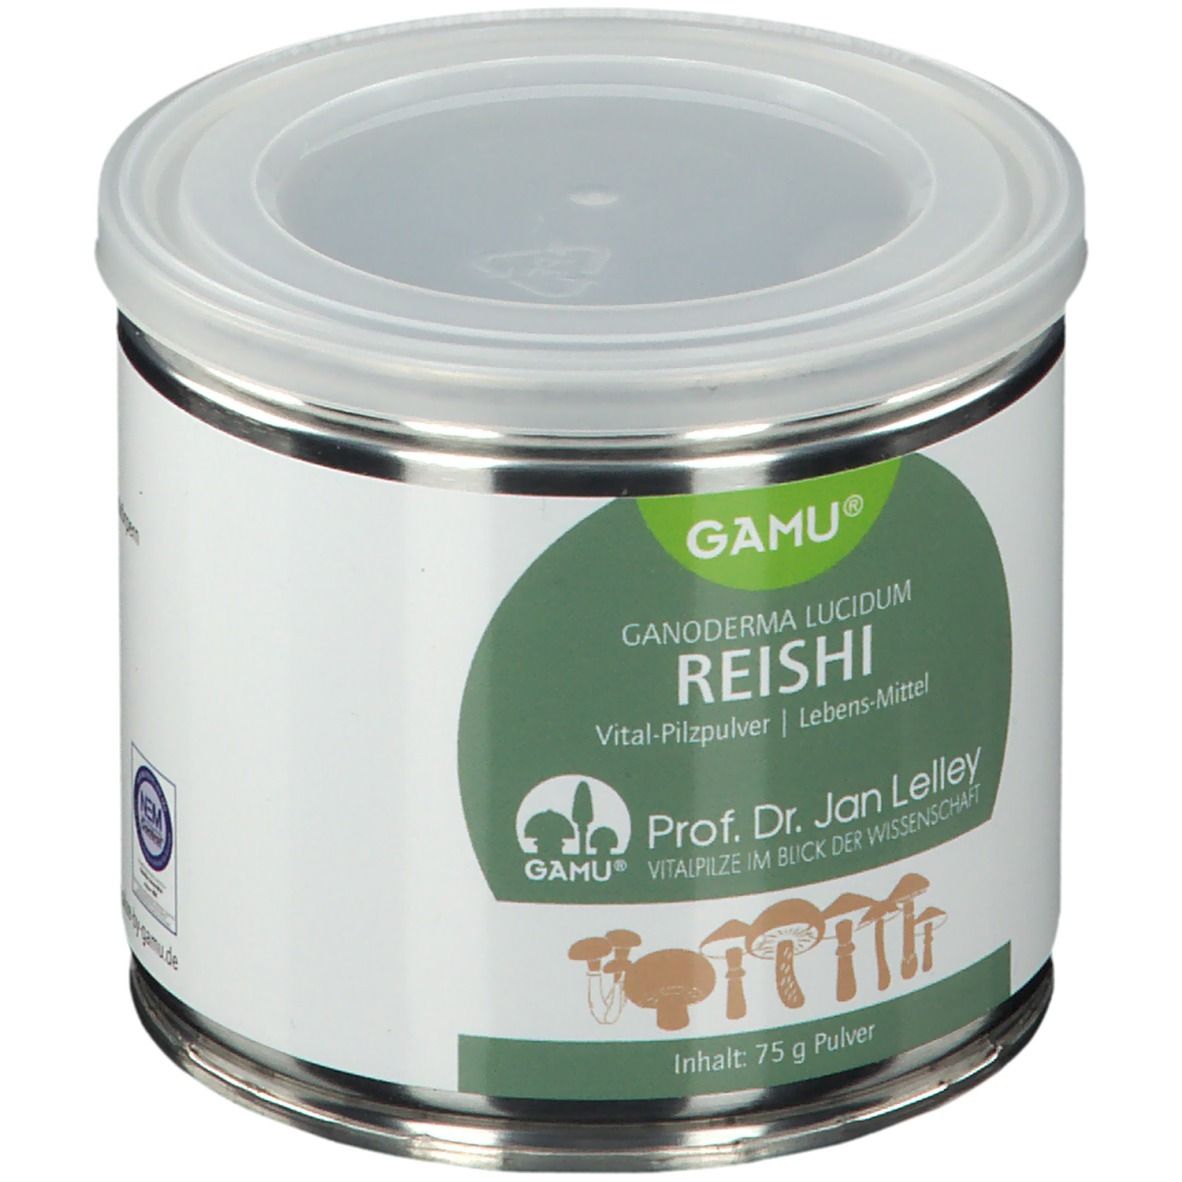 GAMU® REISHI Vital-Pilzpulver